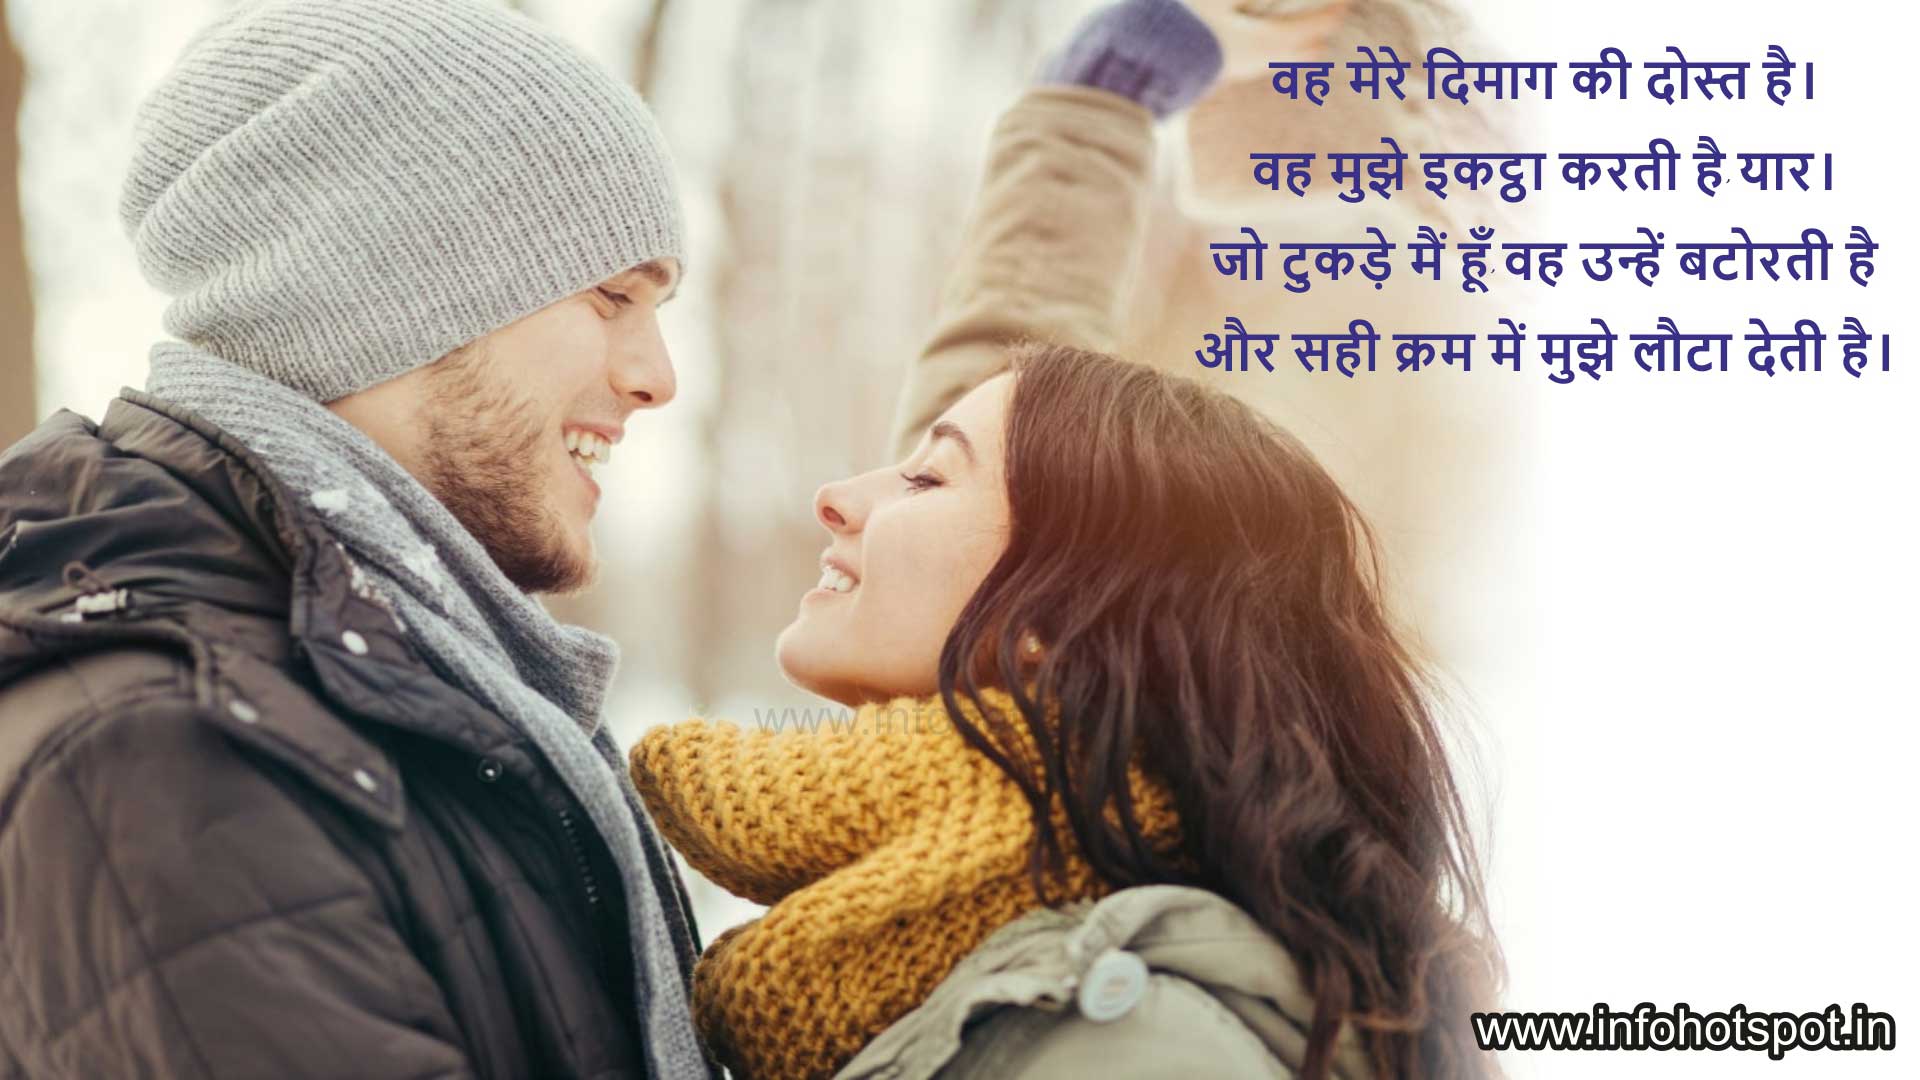 Friendship-Quotes-6-Hindi